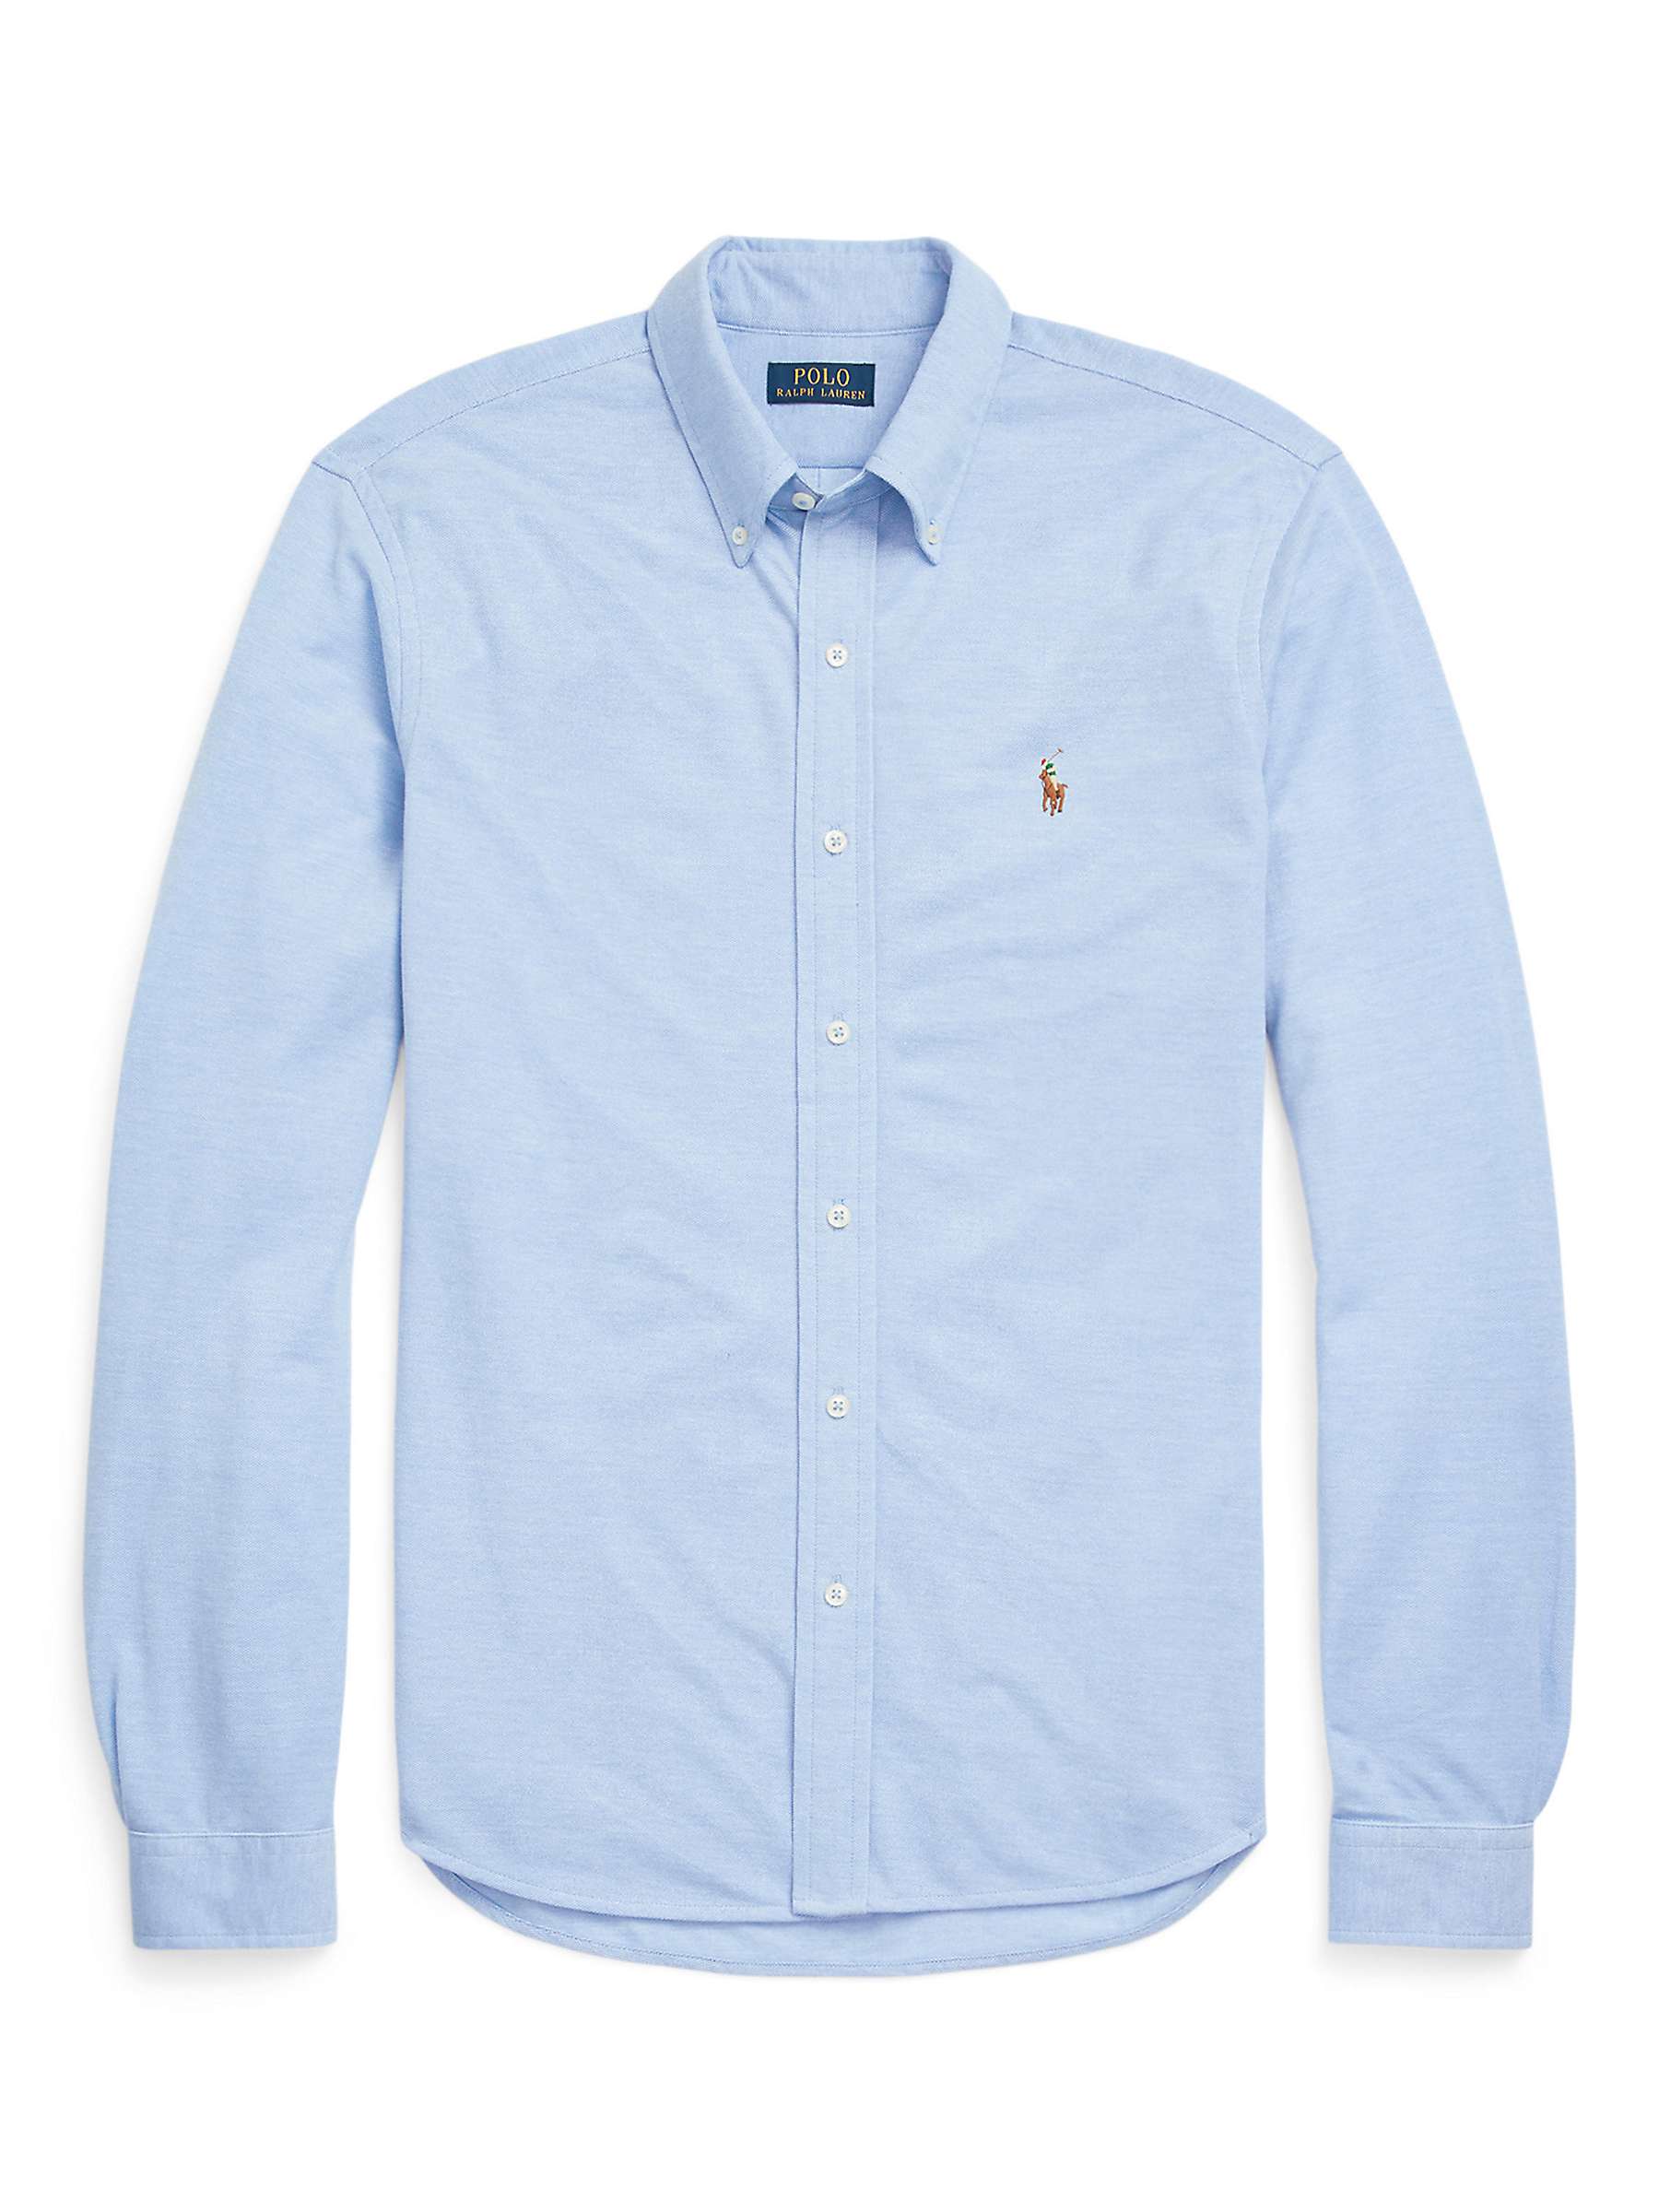 Buy Polo Ralph Lauren Knit Oxford Shirt, Blue Online at johnlewis.com